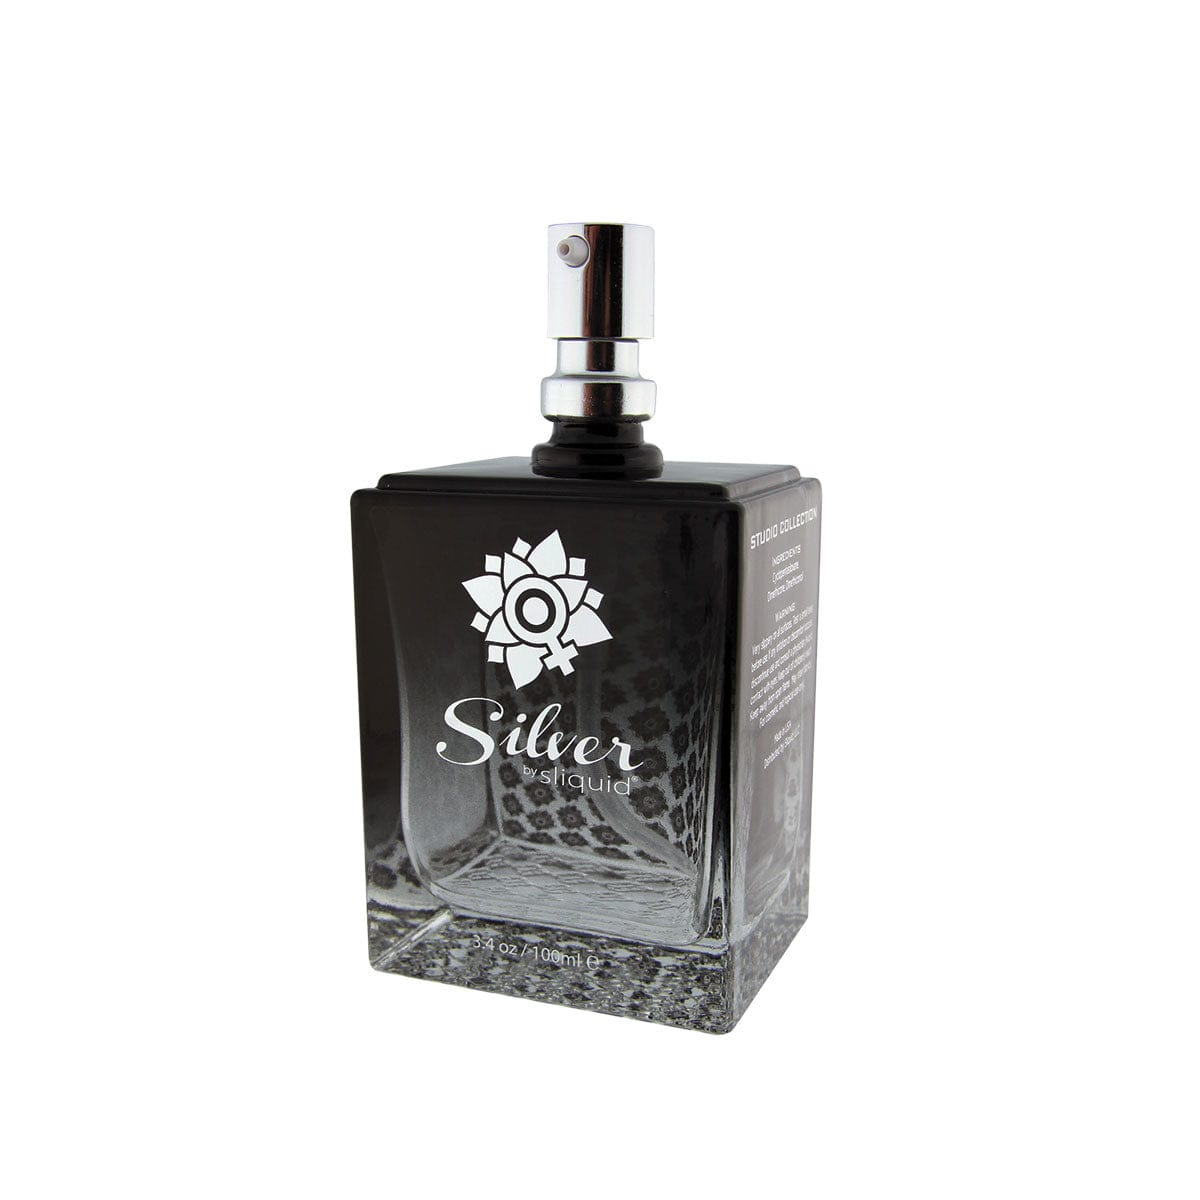 Silver Silicone-Based Lube by Sliquid - rolik